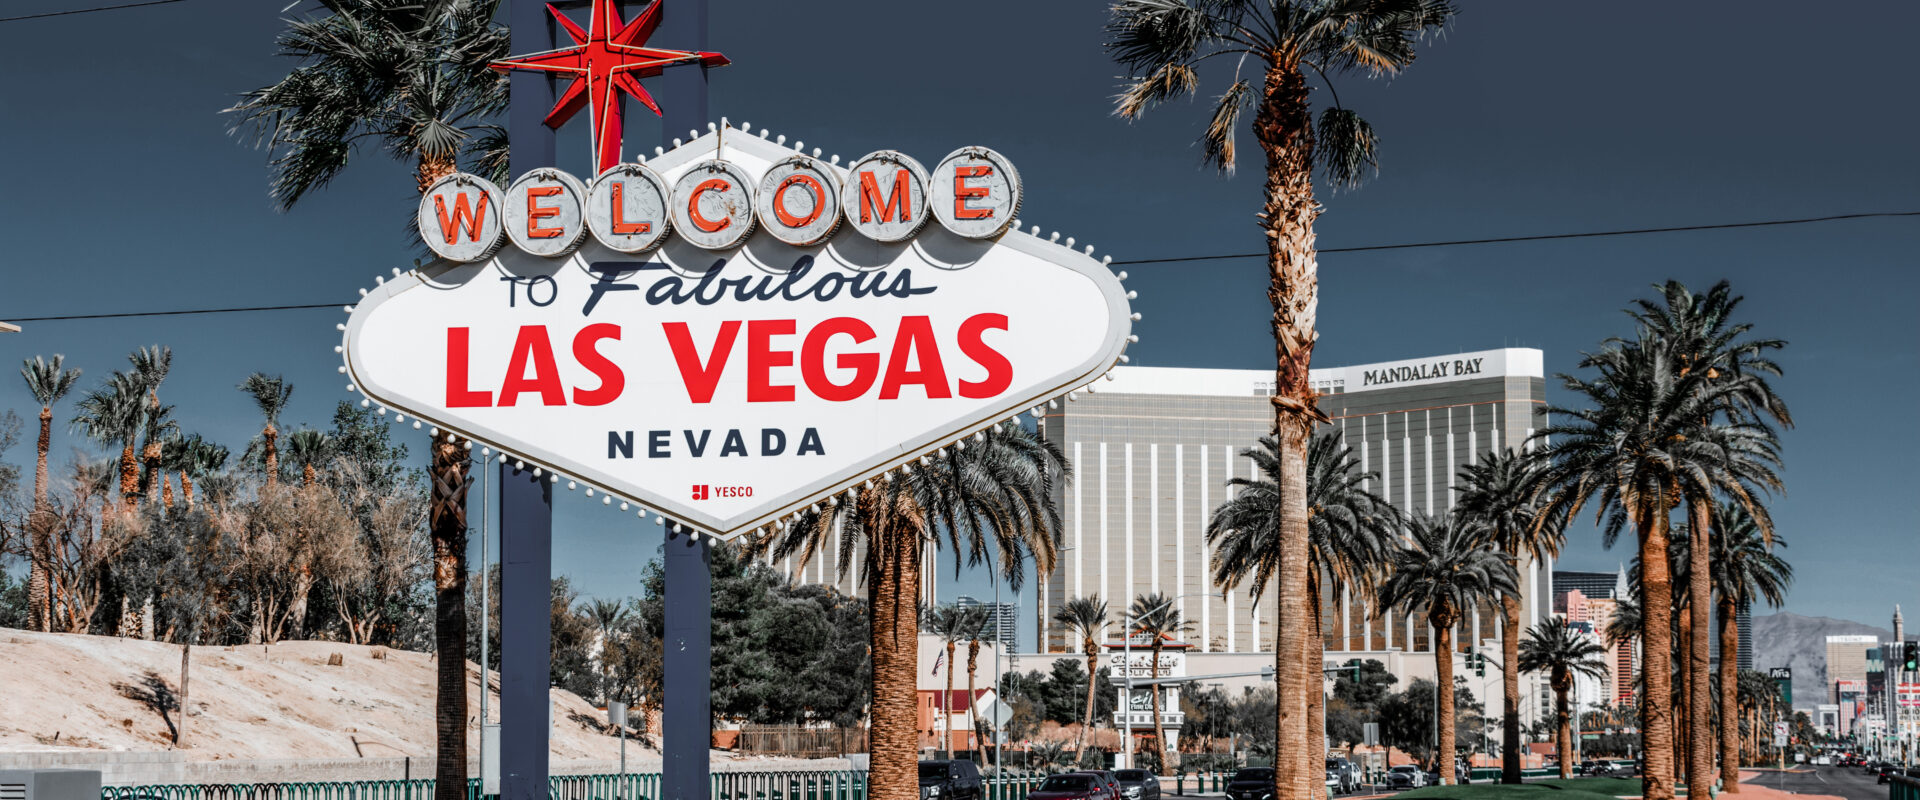 The Las Vegas Sign